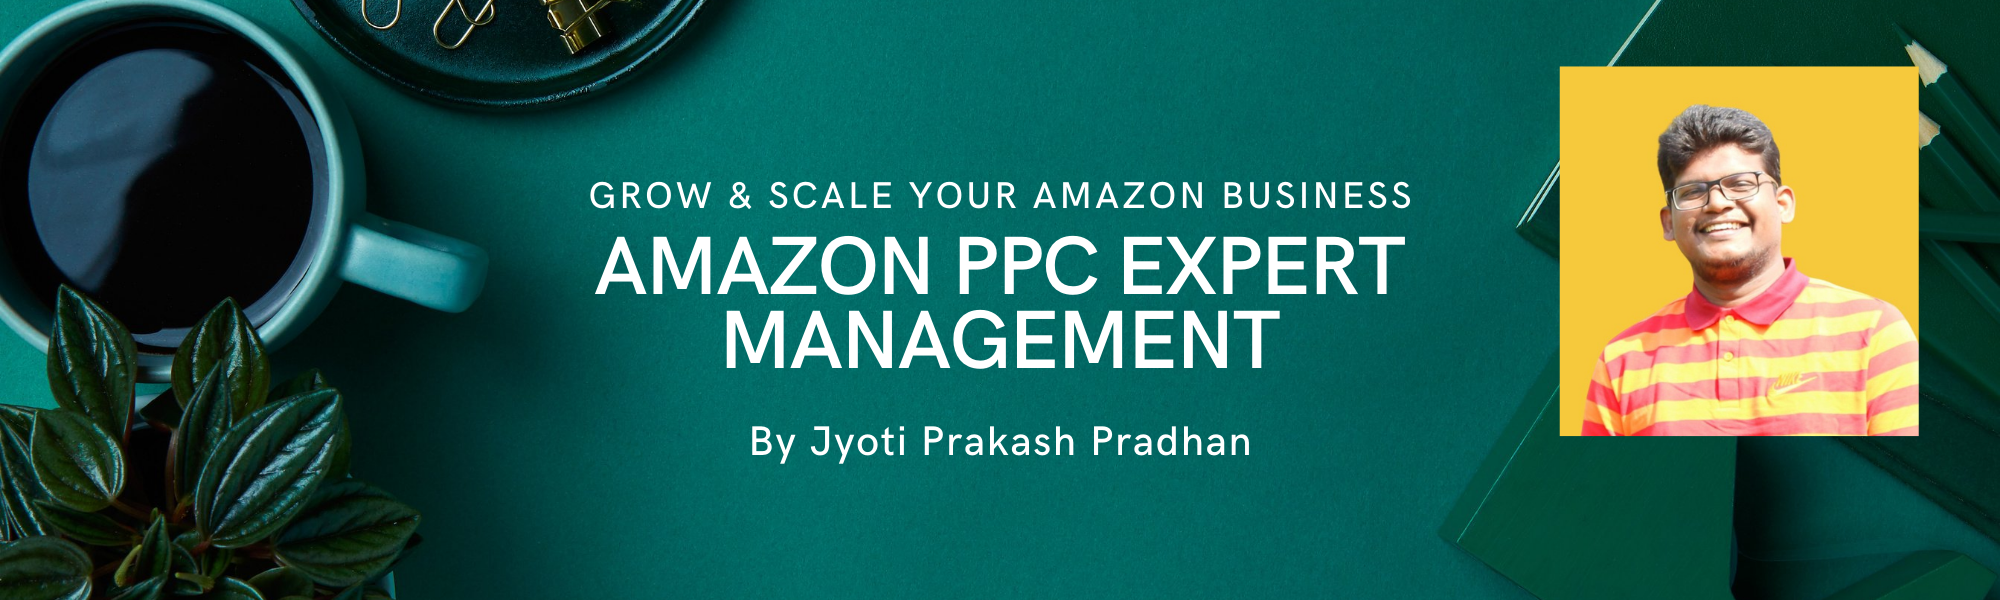 Amazon PPC Expert Management Jyoti Prakash Pradhan